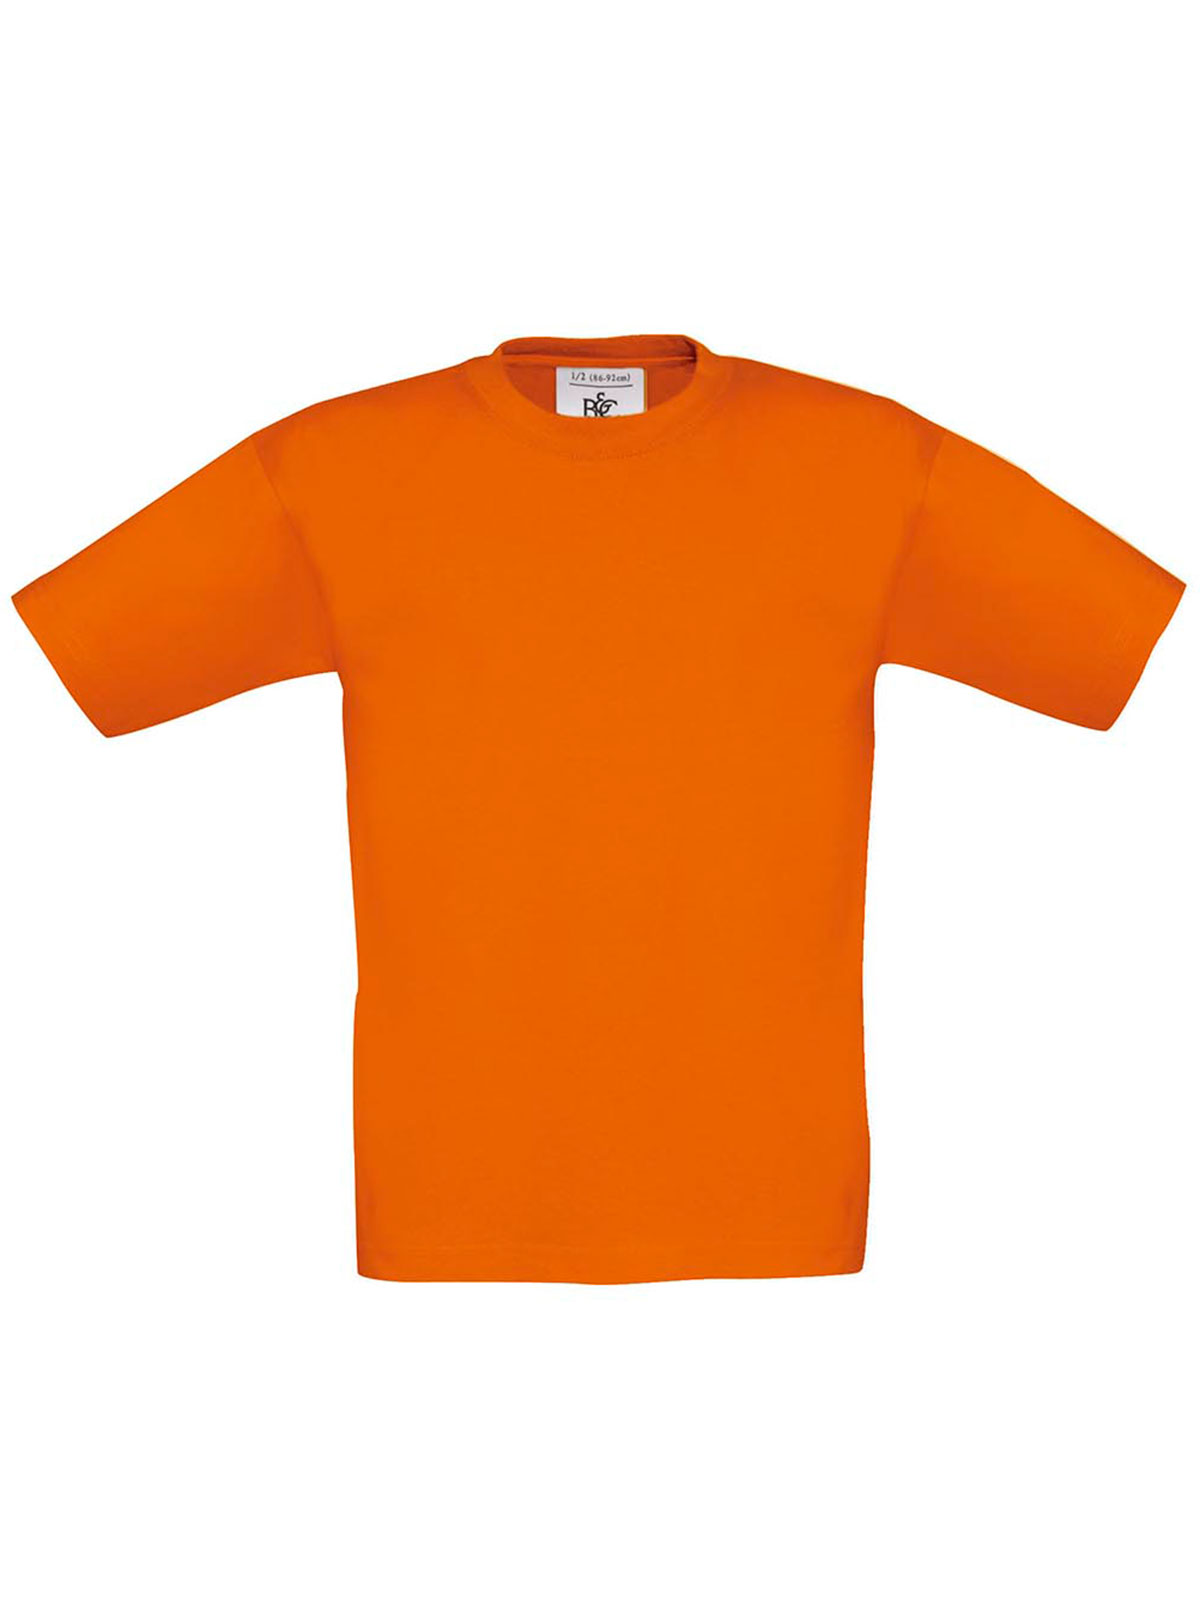 exact-150-kids-orange.webp